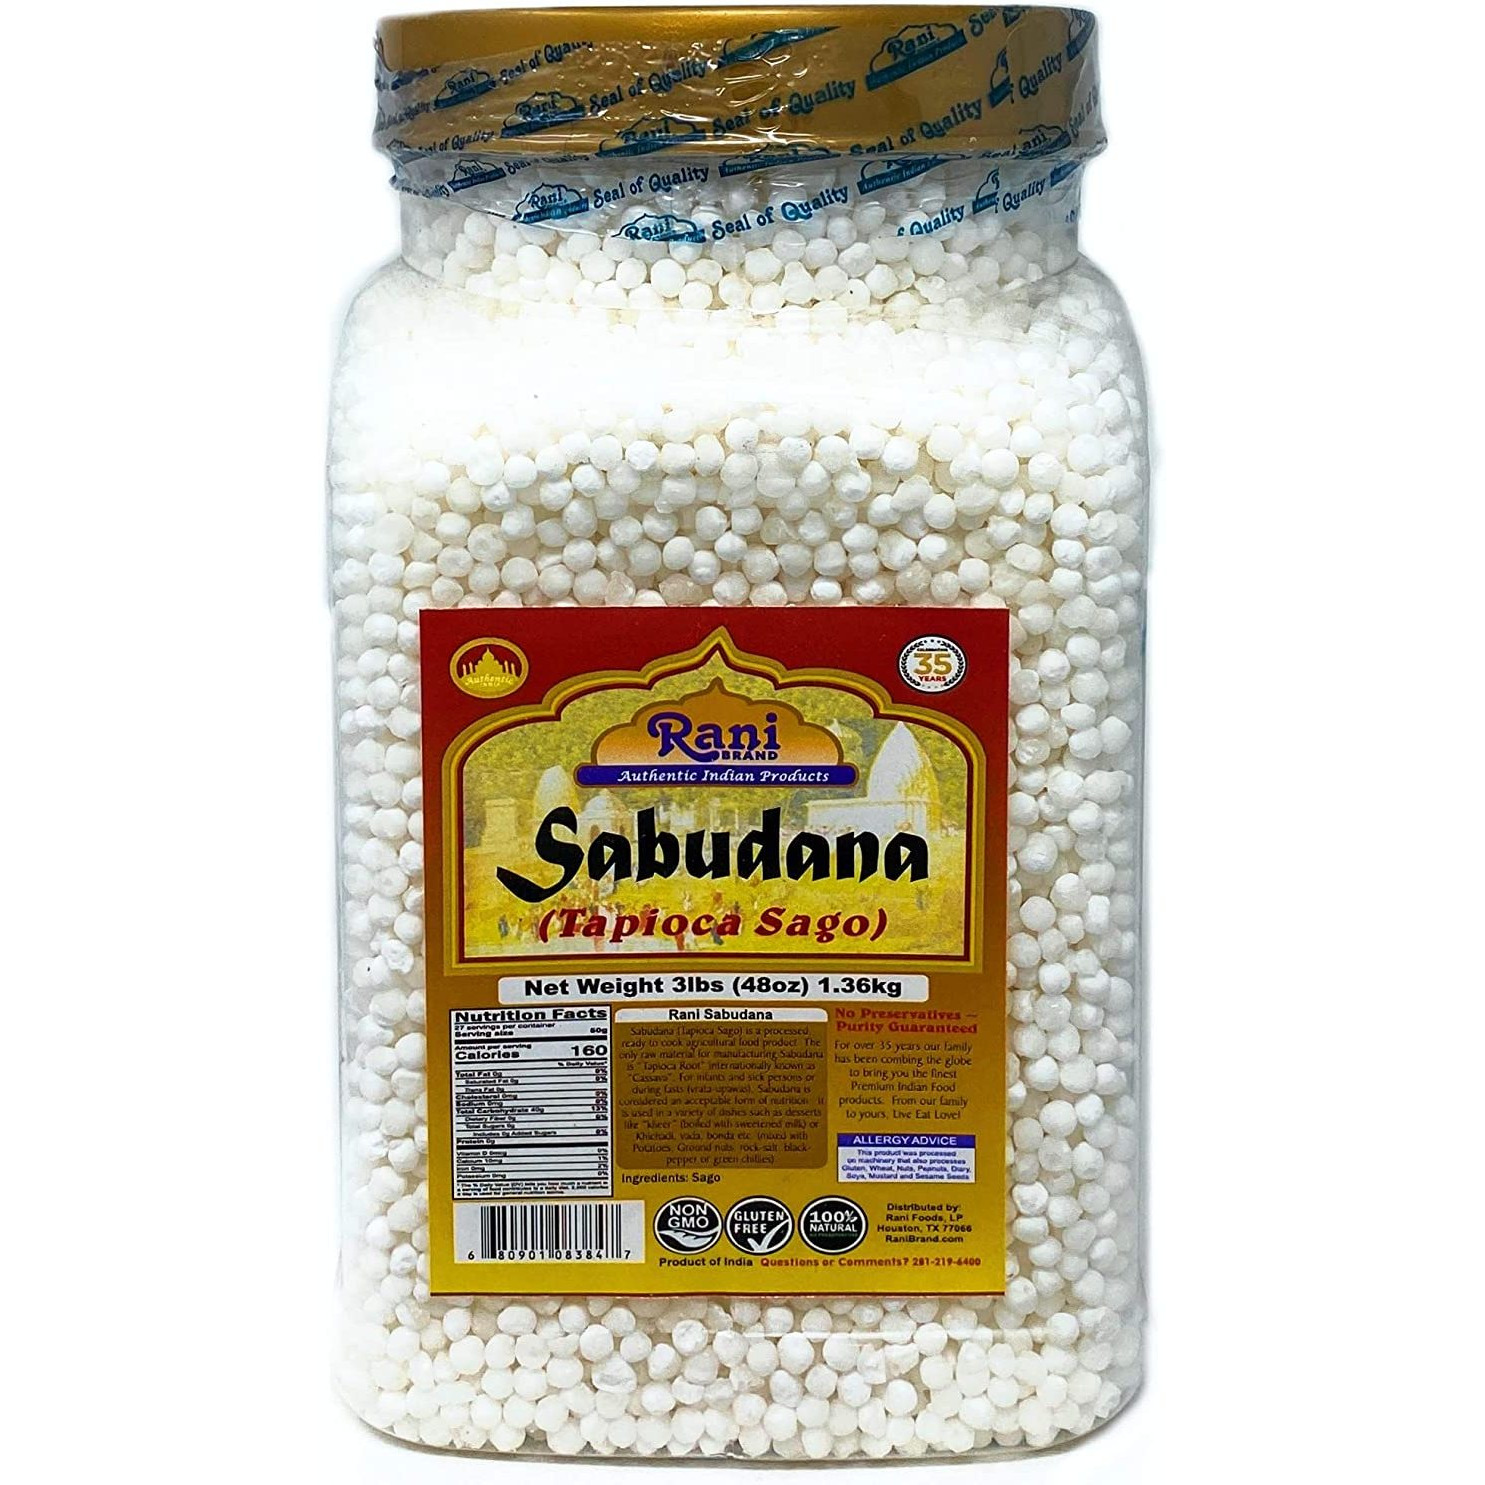 Rani Sabudana (Tapioca / Sago) Pearls 3lbs (48oz) Pet Jar Bulk ~ All Natural | Vegan | No Colors | NON-GMO | Indian Origin